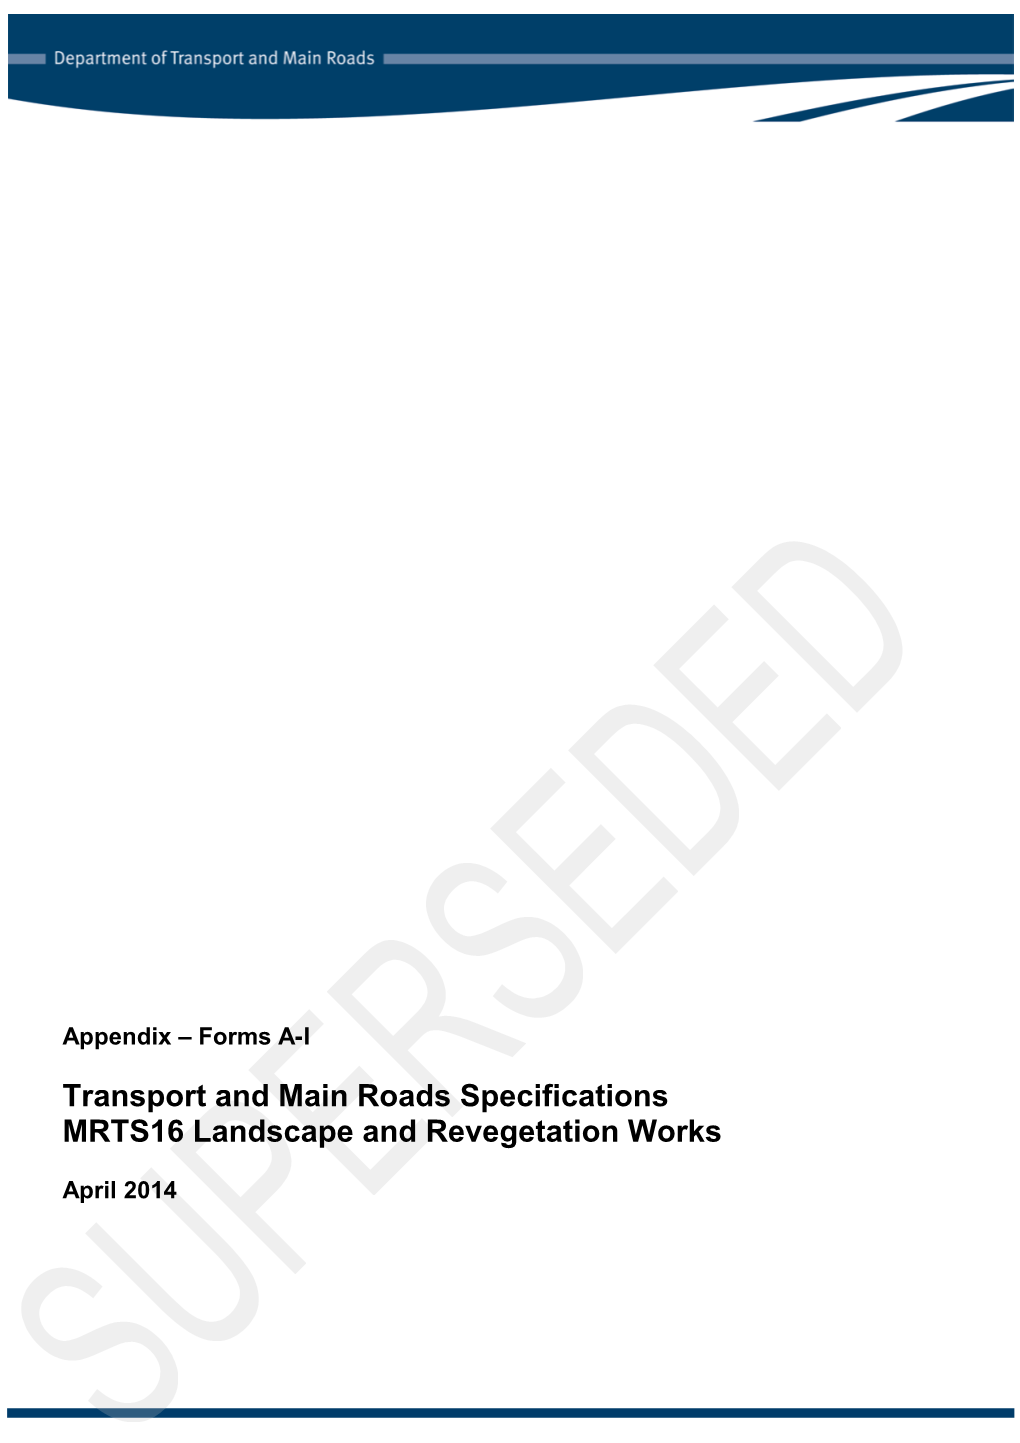 Appendix MRTS16 Landcape and Revegetation Works